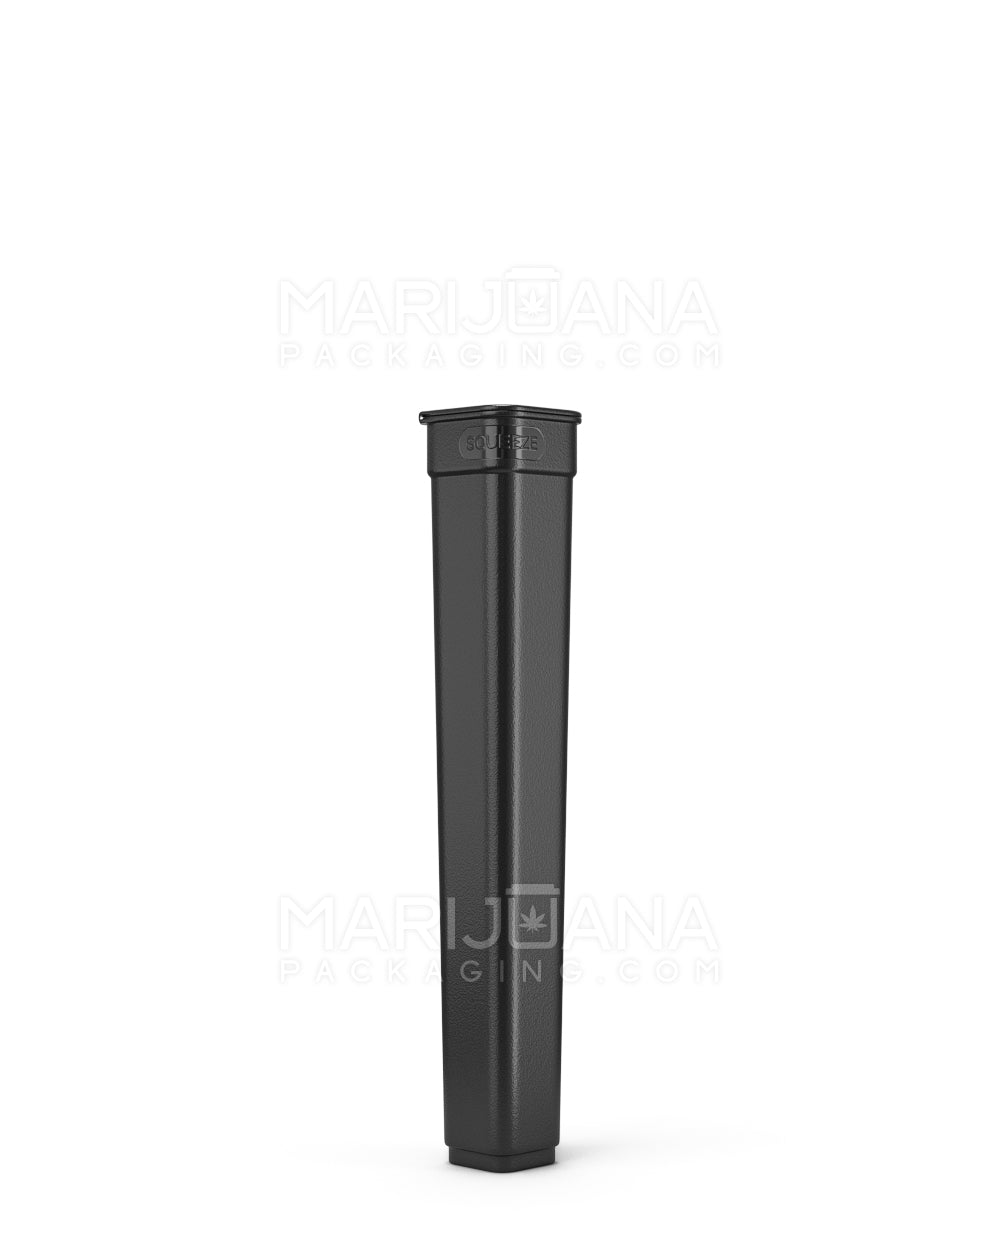 POLLEN GEAR | 100% Recyclable Opaque Pop Box Pop Top Plastic Pre-Roll Tubes | 119mm - Black - 1840 Count